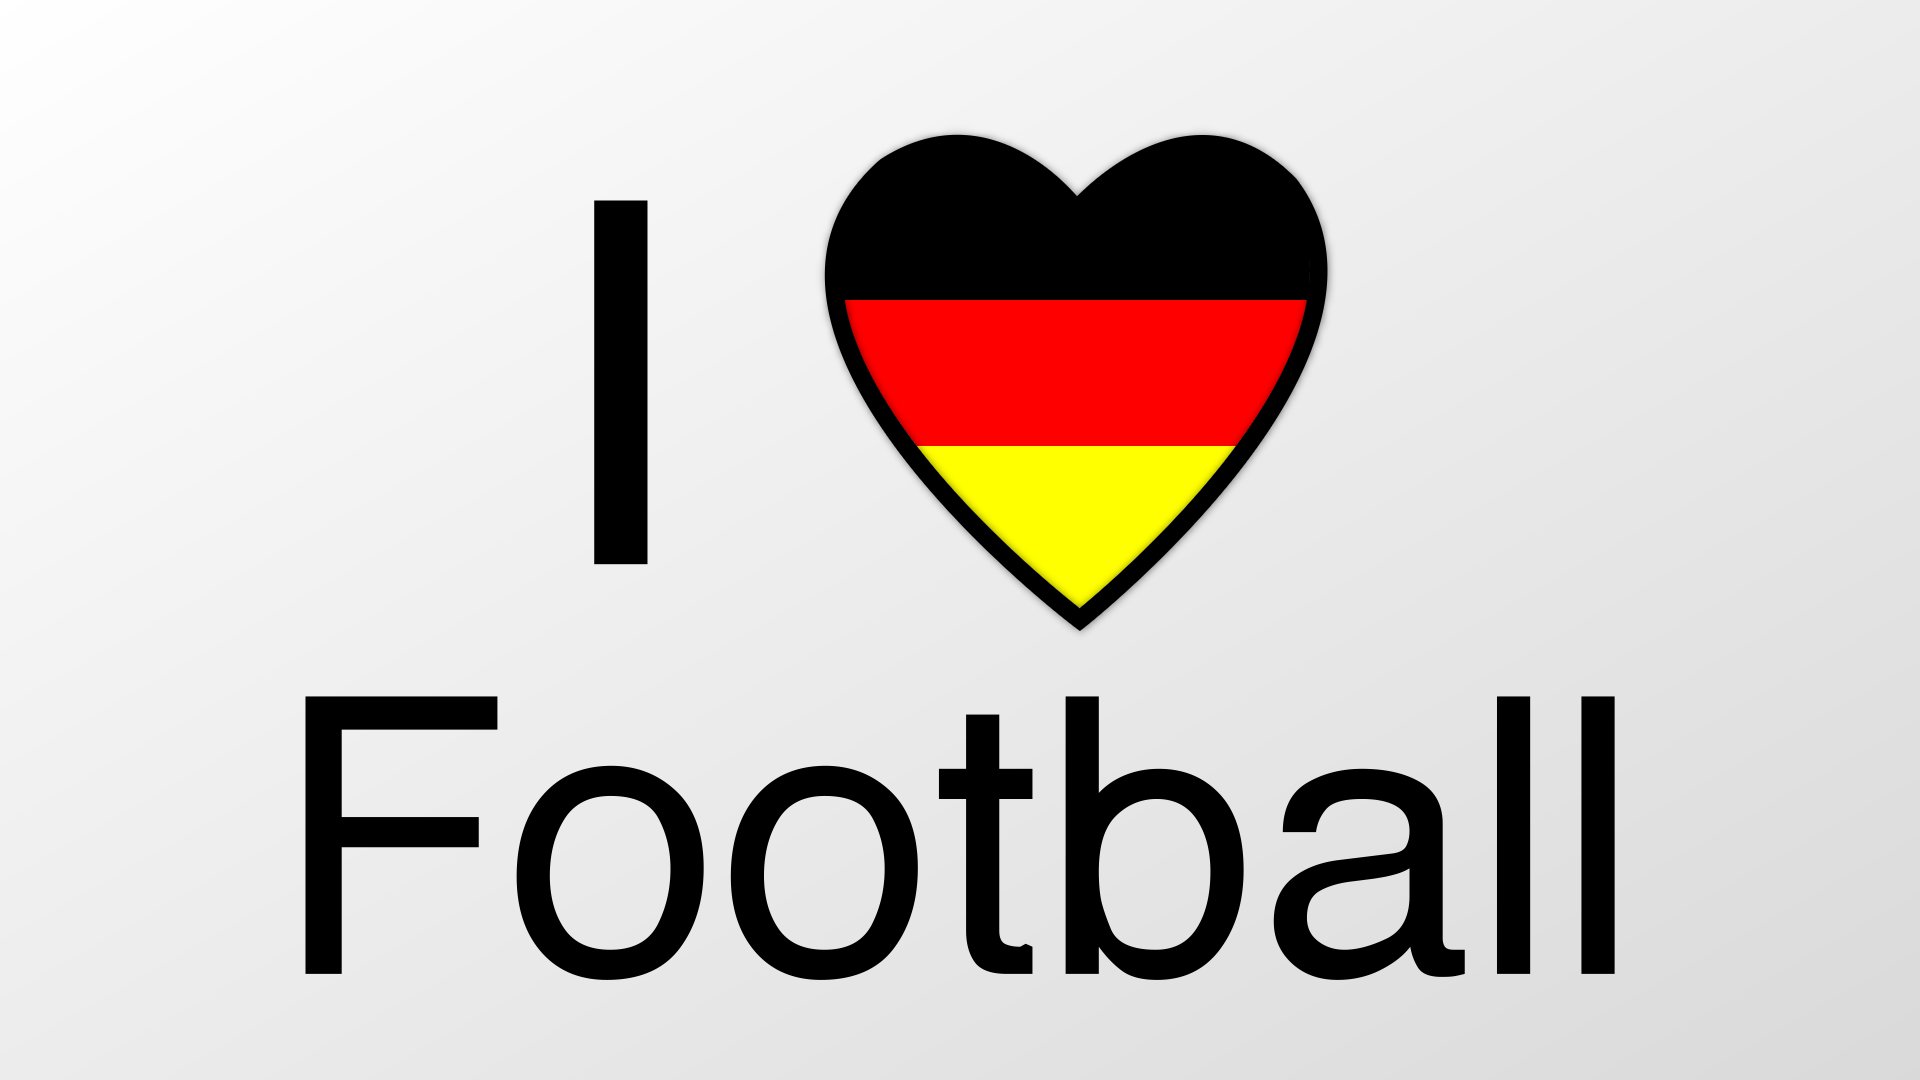 Love Football By Spaddelhh